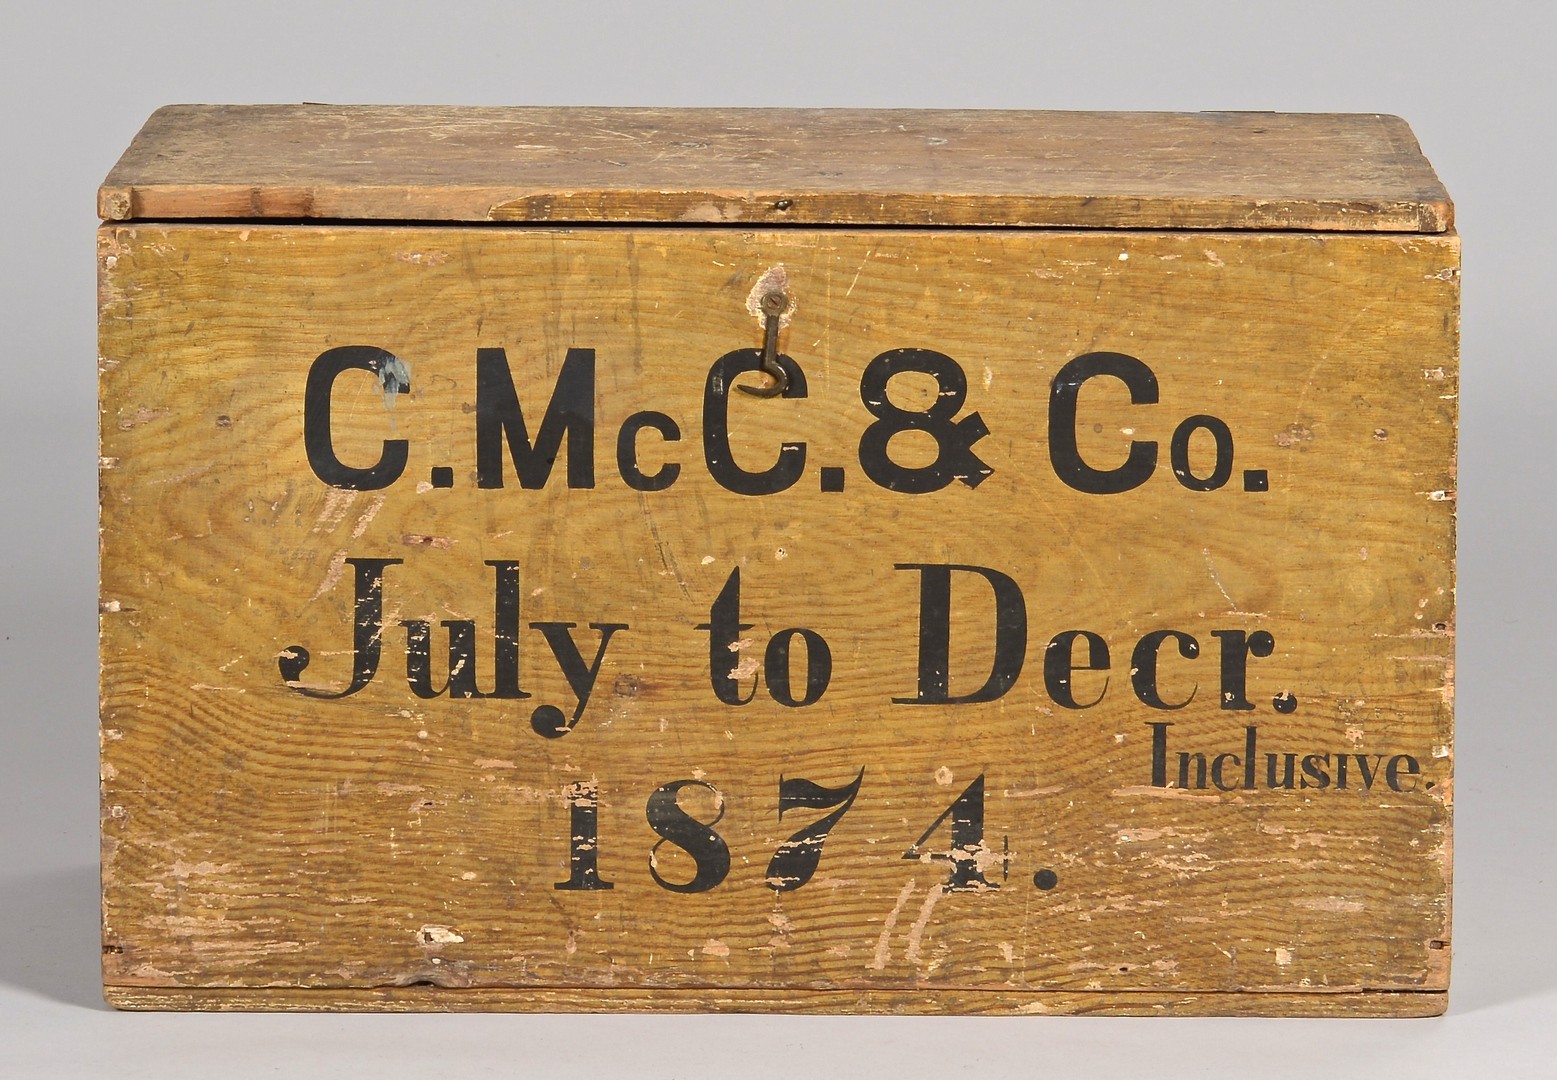 Lot 287: McClung Warehouse Grain Painted Box, 1874